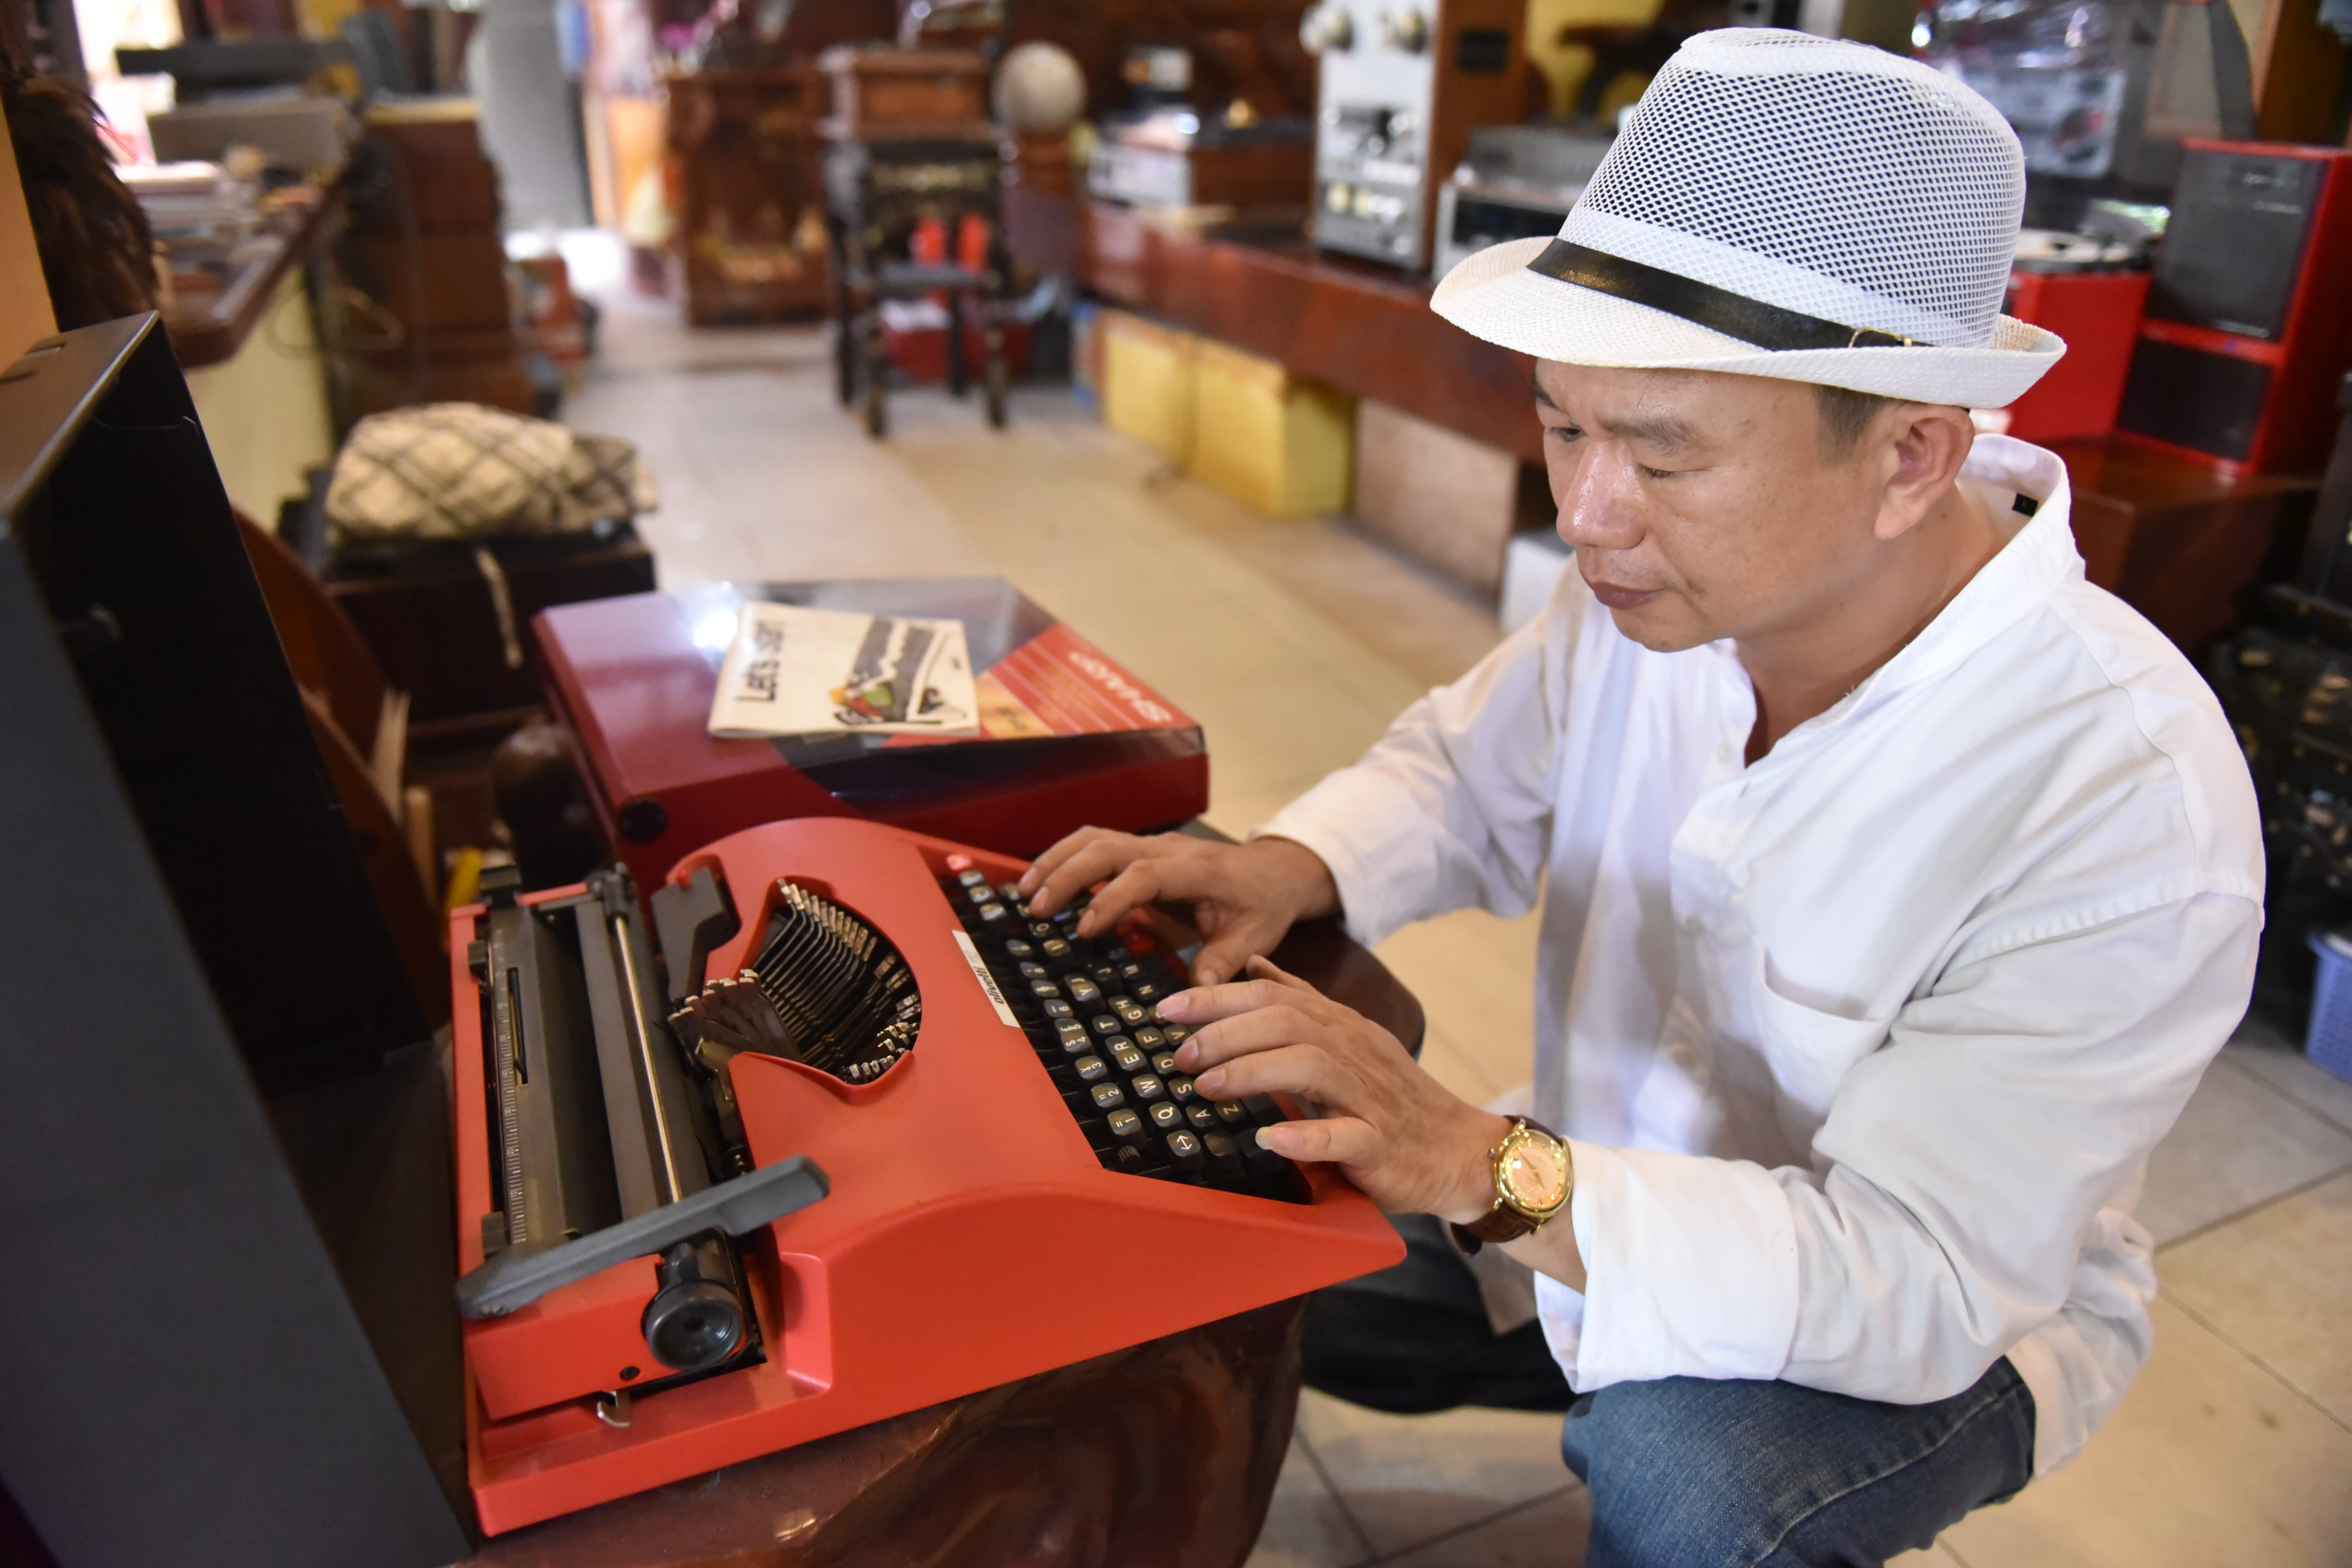 A Japanese typewriter in Tuan Akai’s collection. Photo: Ngoc Phuong / Tuoi Tre News